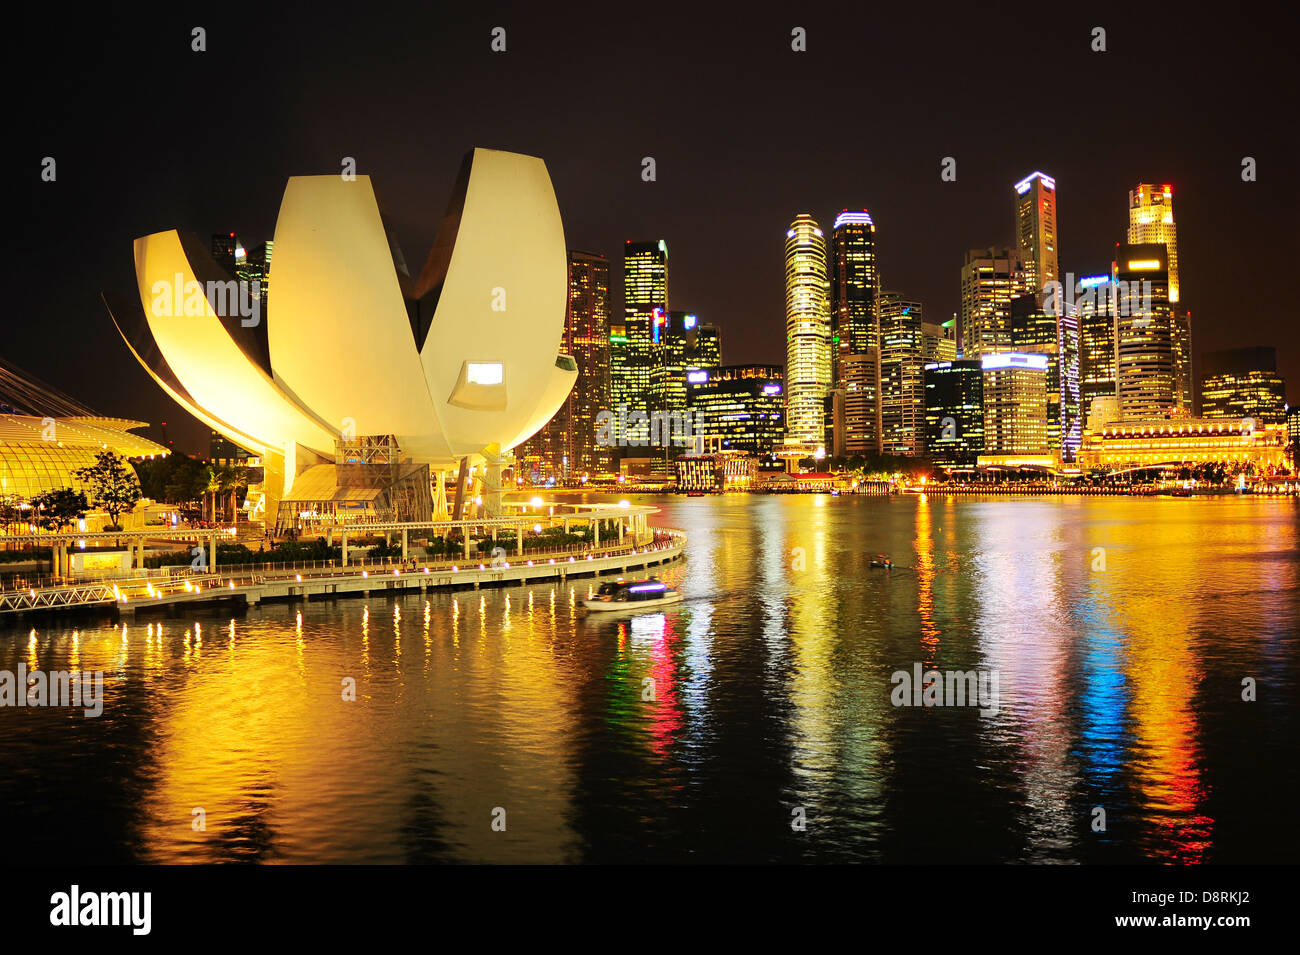 Skyline of Singapore at night. View from Helix bridge Stock Photo